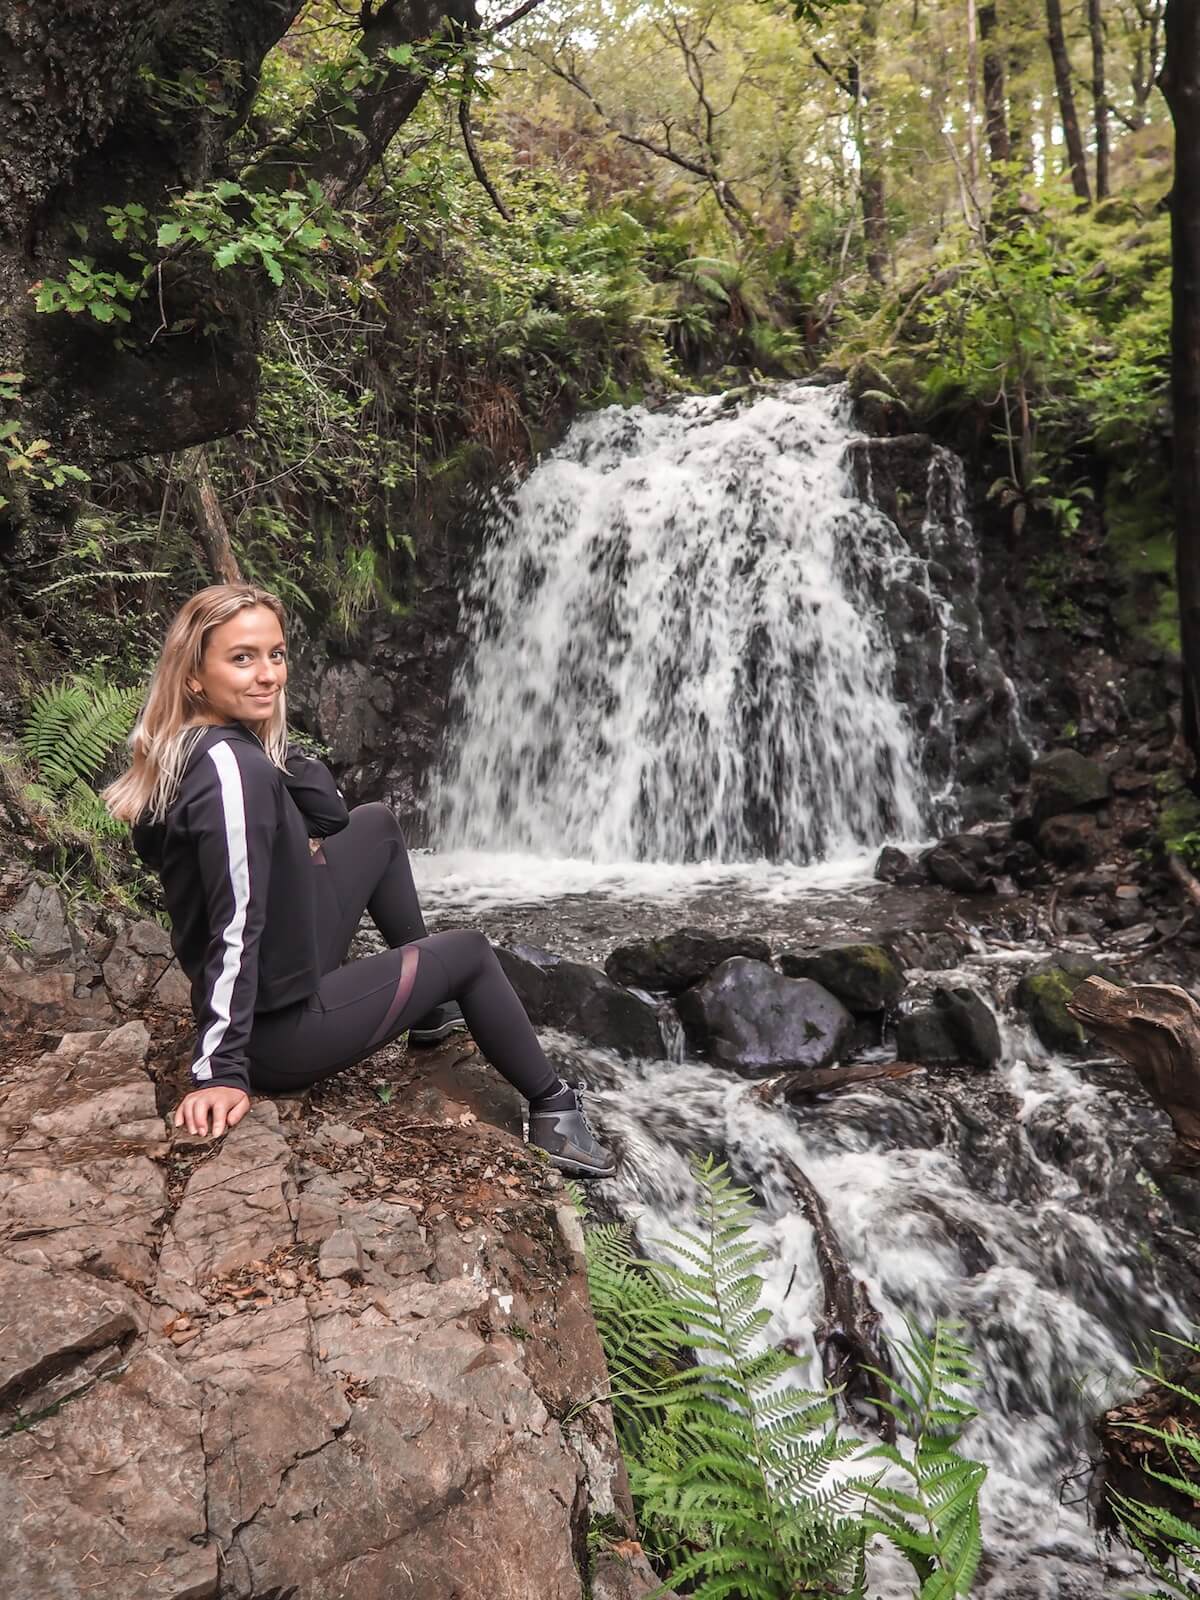 Waterfall near the Tarn Hows walk in the Lake District